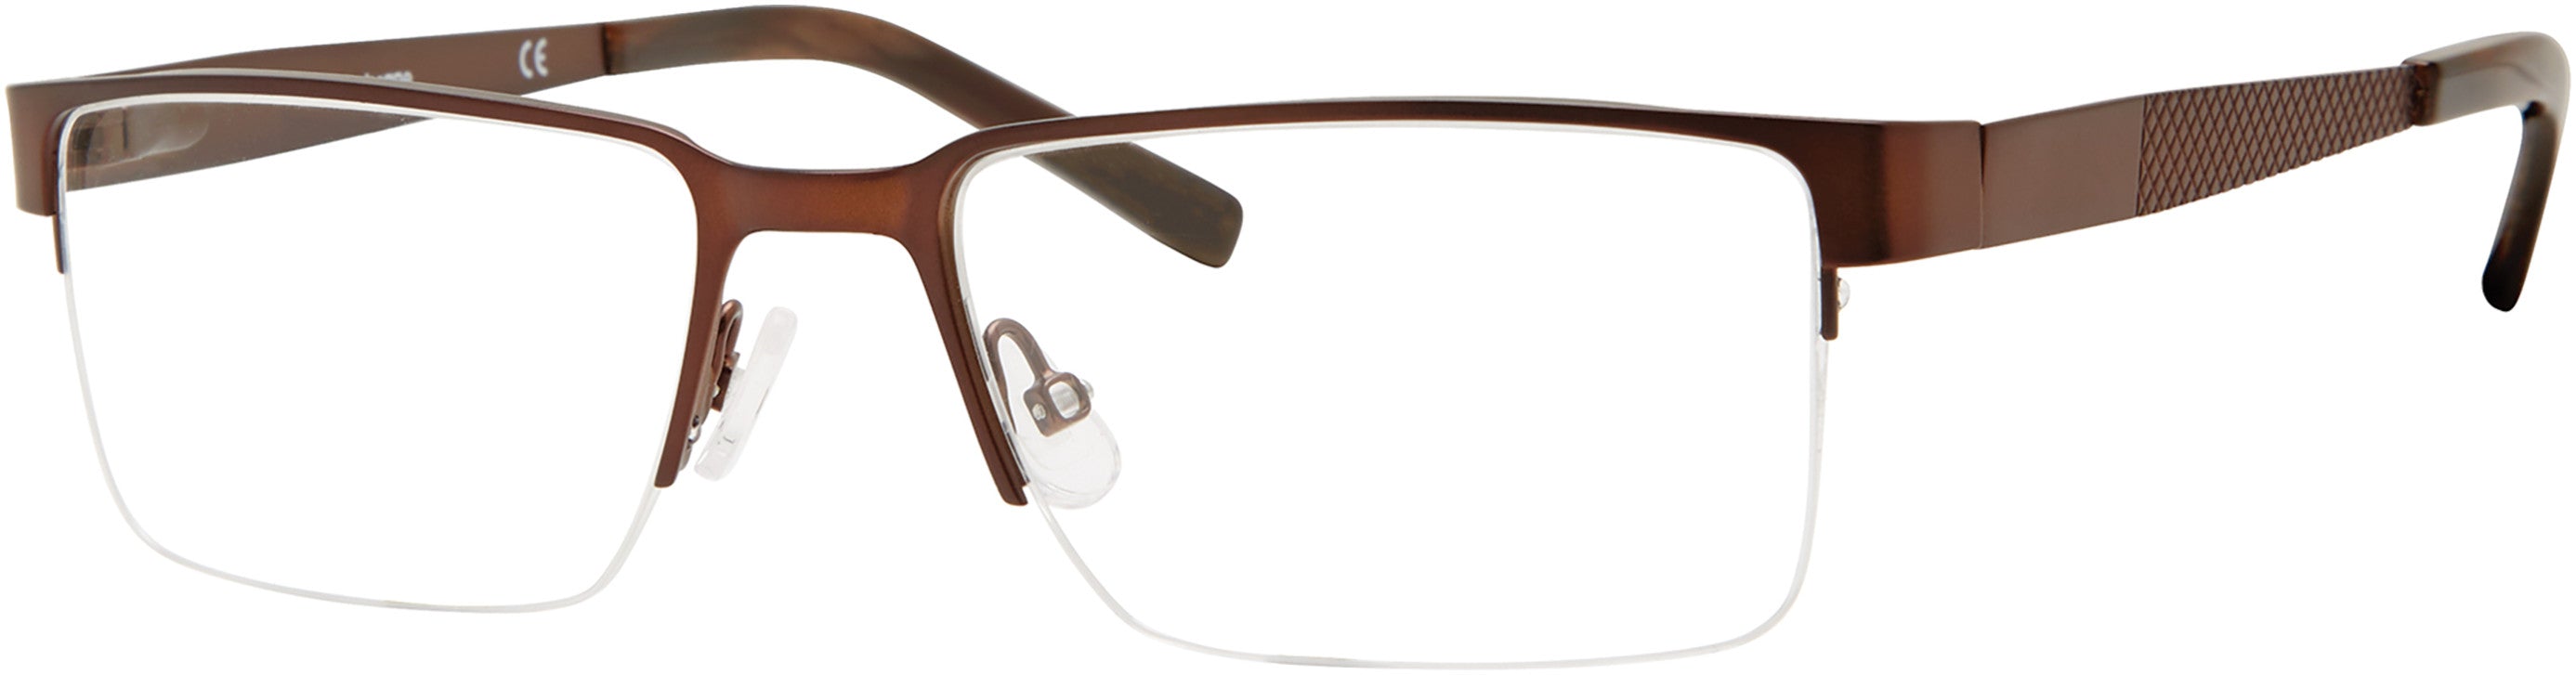  Claiborne 246 Rectangular Eyeglasses 0R0Z-0R0Z  Dark Brown (00 Demo Lens)